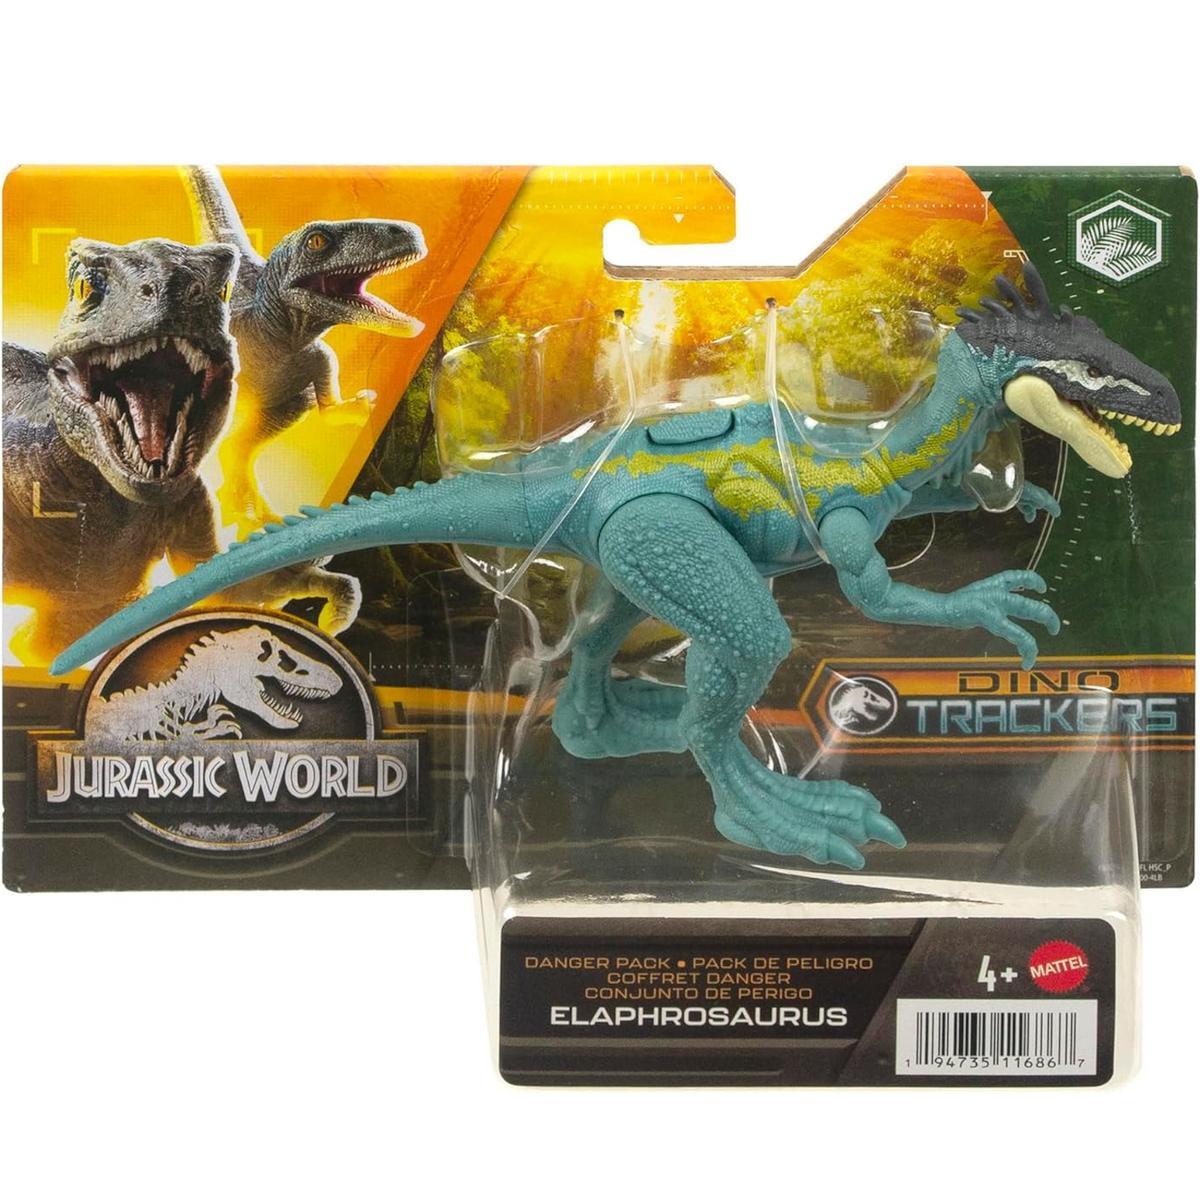 Jurassic world dino trackers park jurajski figurka dinozaur elaphrosaurus nr. 1